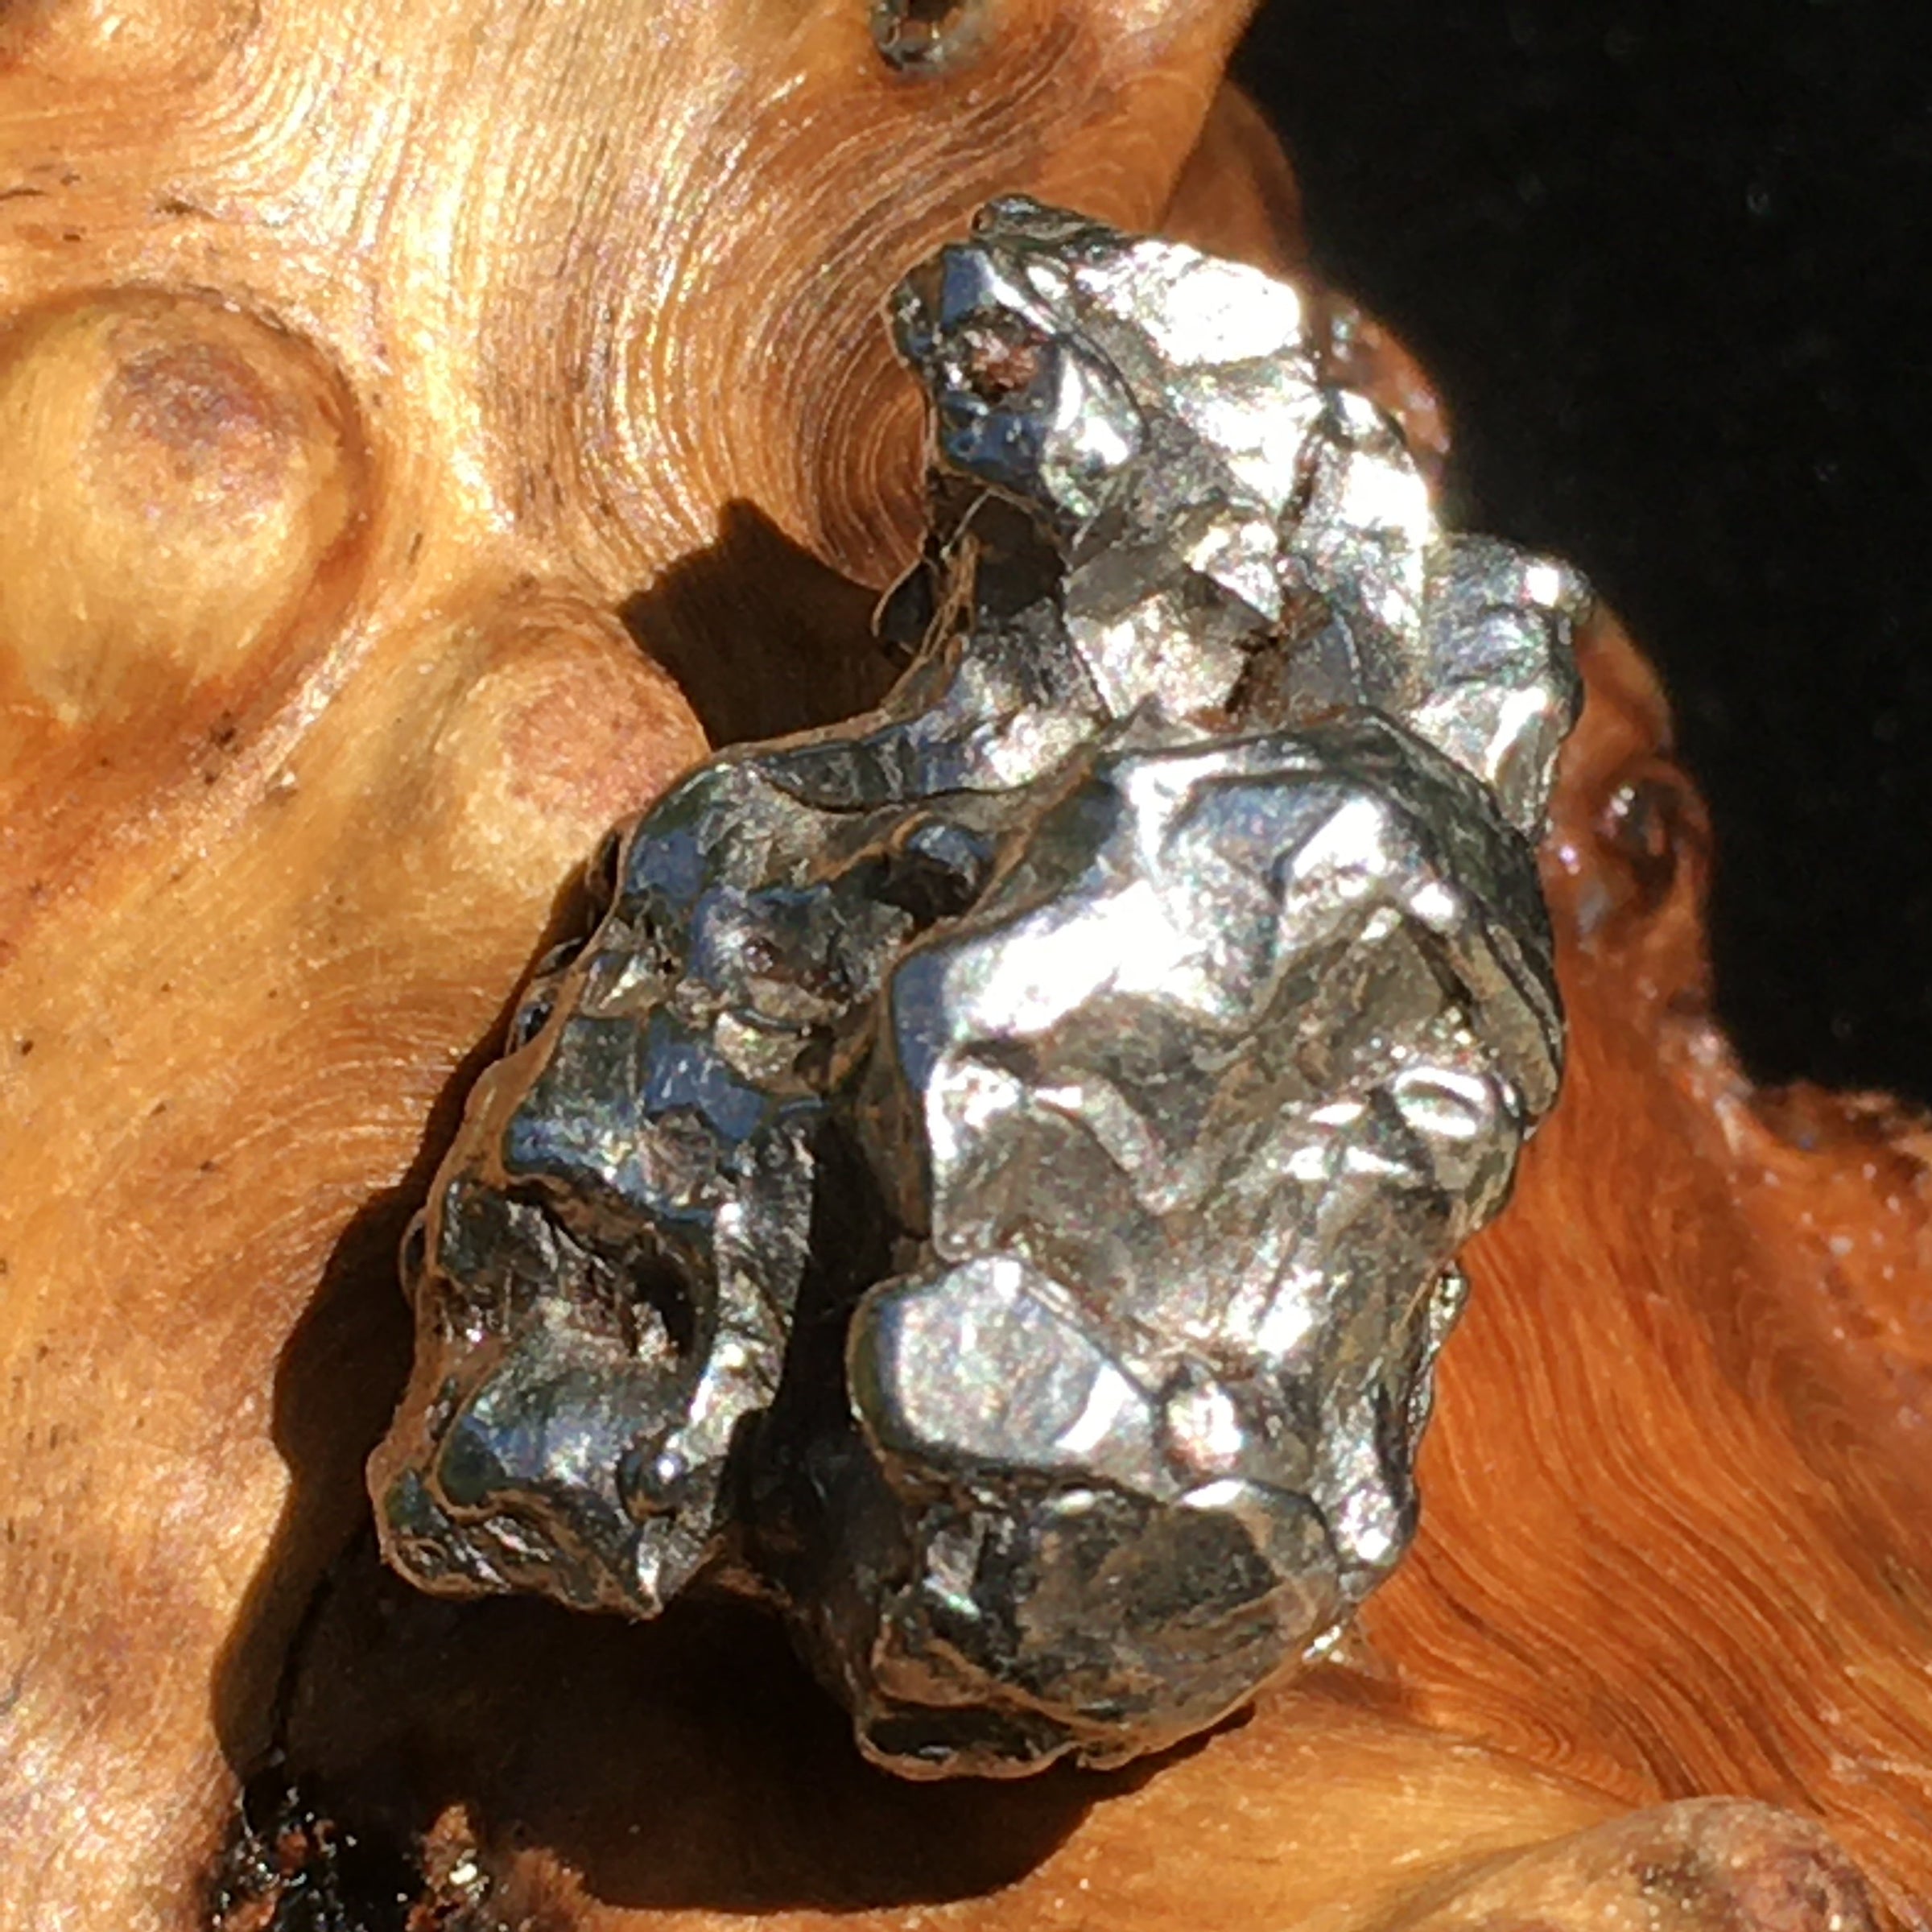 Meteorite Campo Del Cielo "Field of Heaven" 16 grams-Moldavite Life